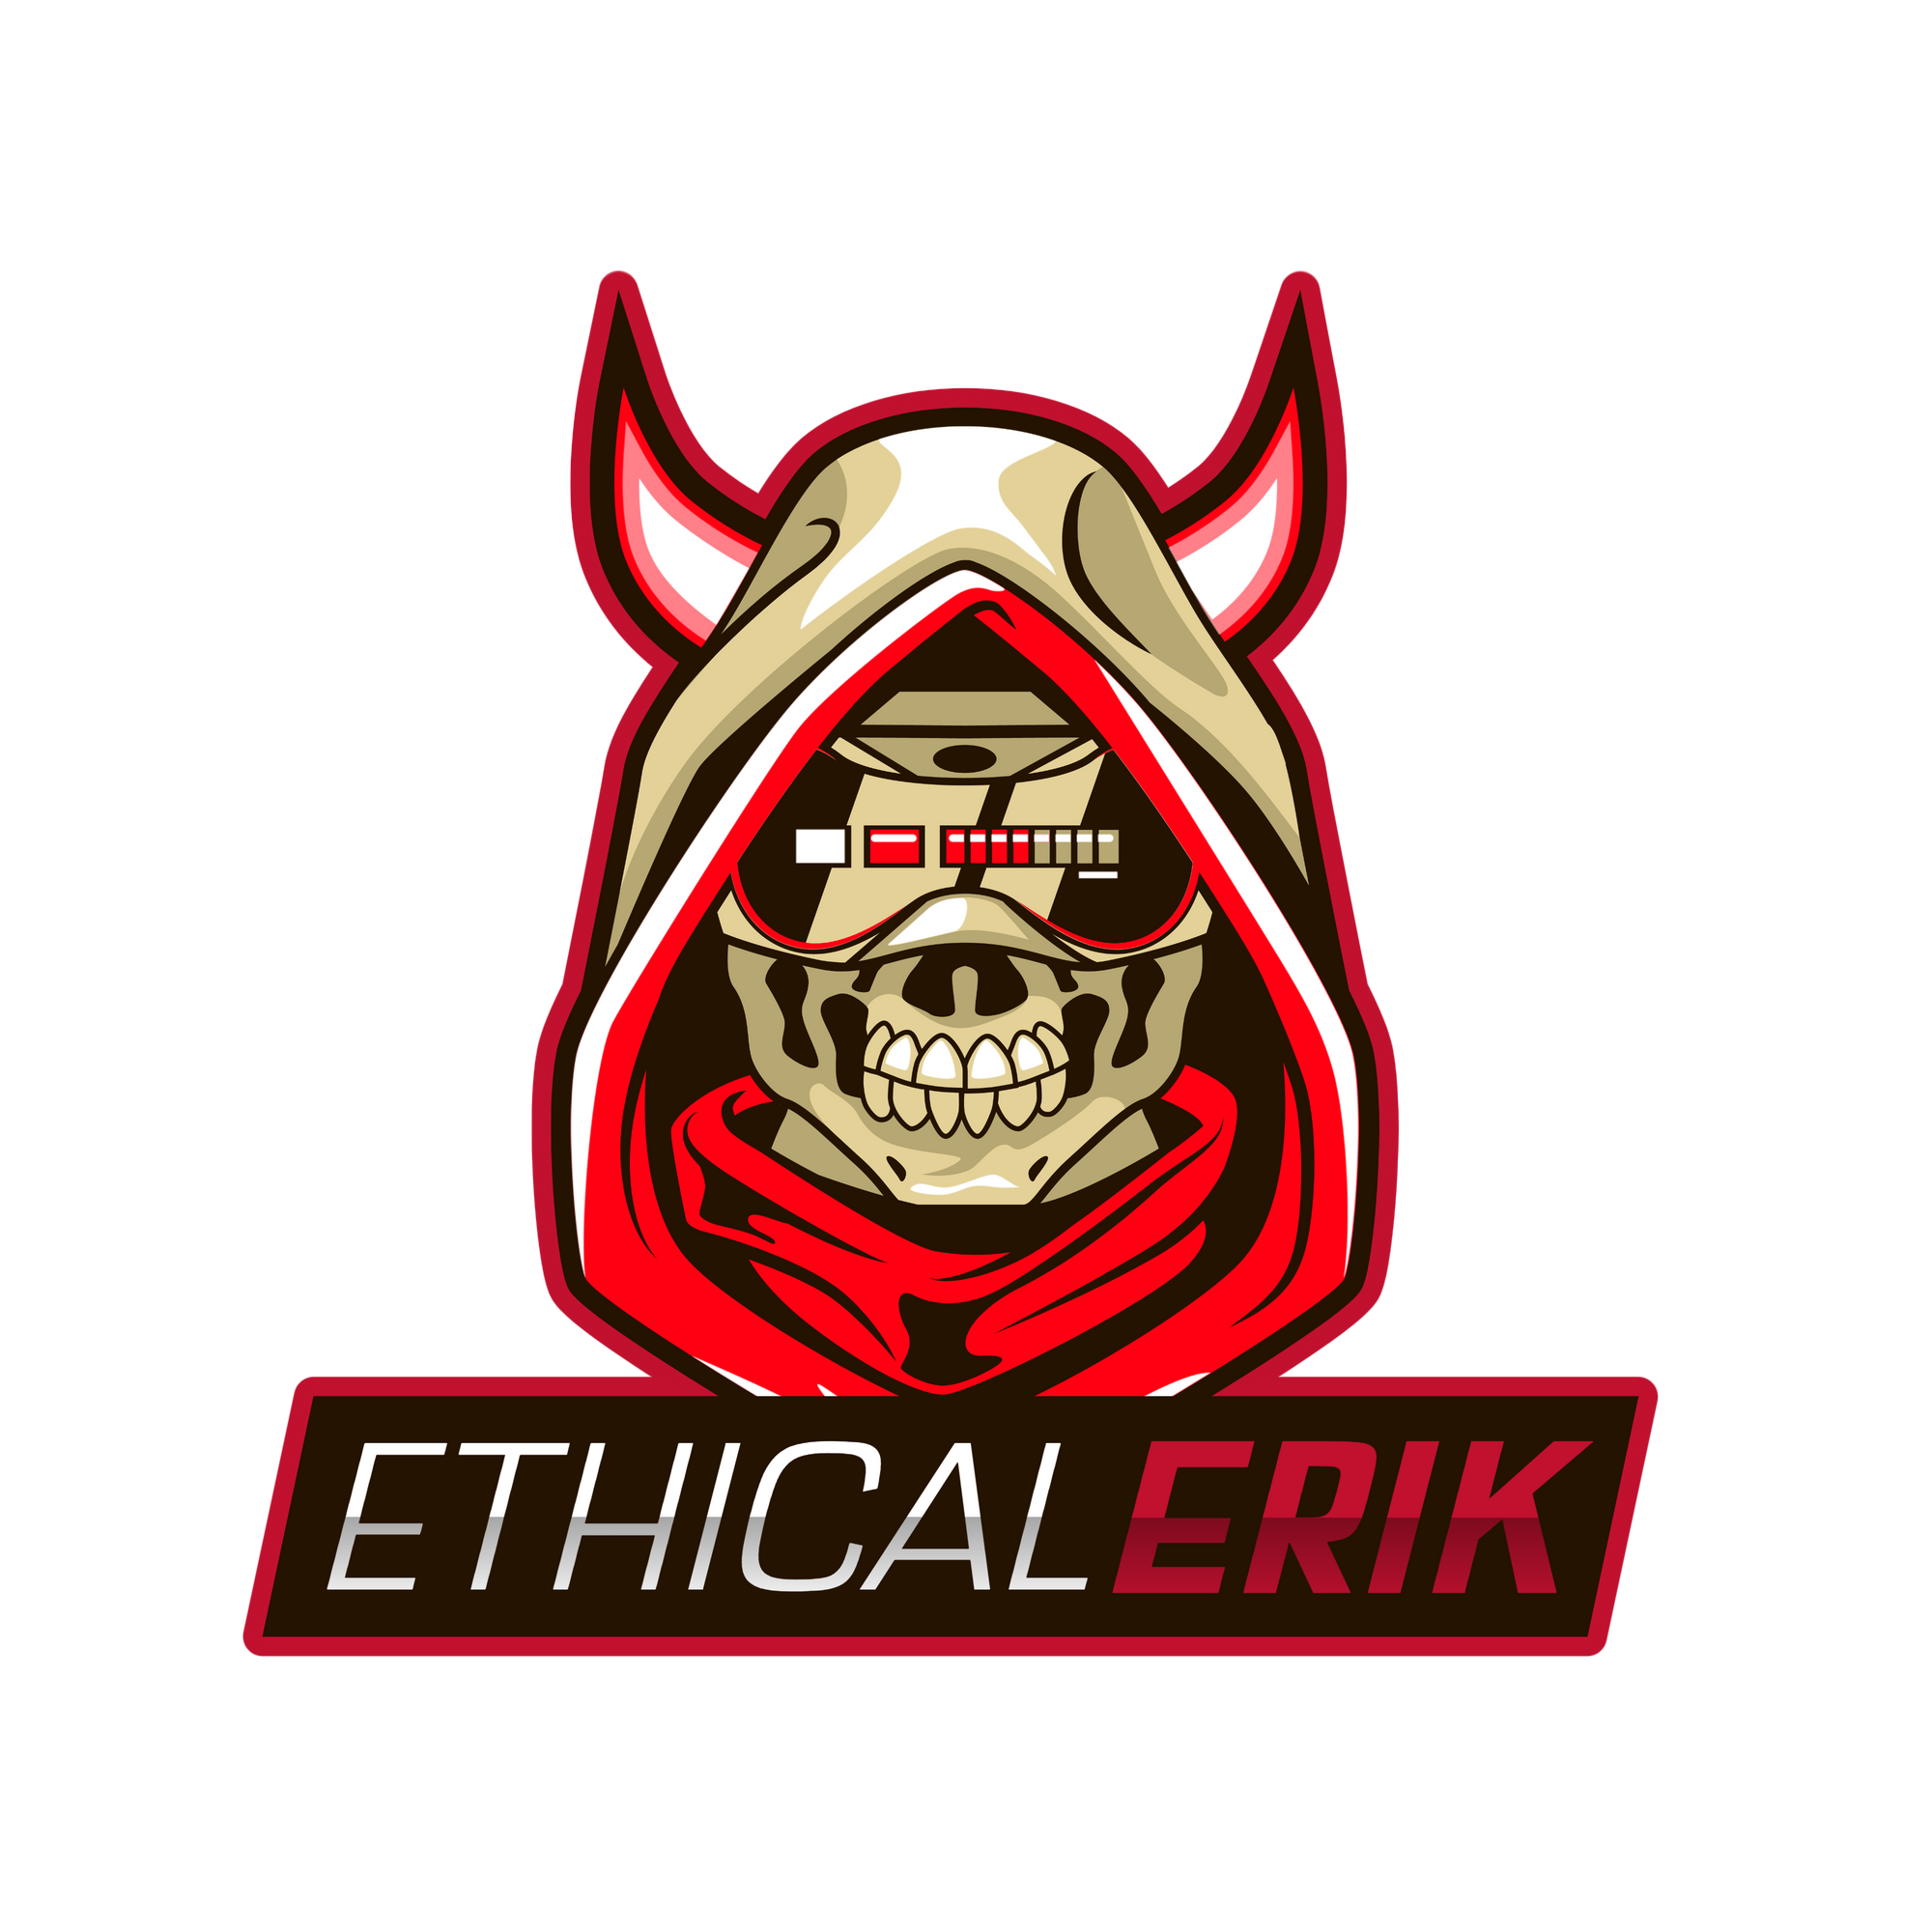 Ethical Erik - Tips&Tricks about hacking